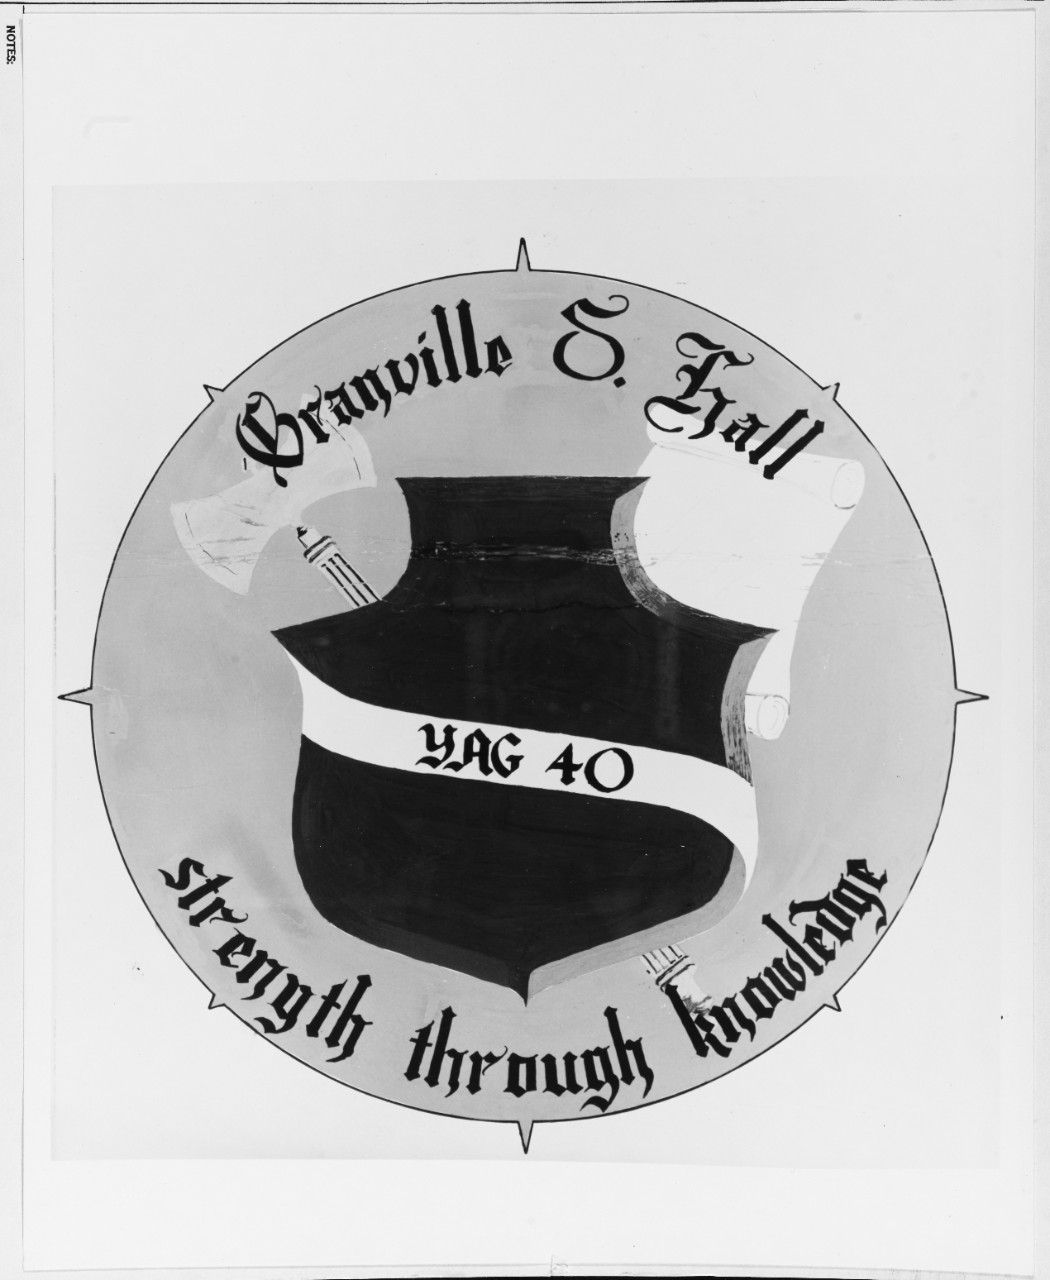 Photo #: NH 64768-KN Insignia: USS Granville S. Hall (YAG-40)